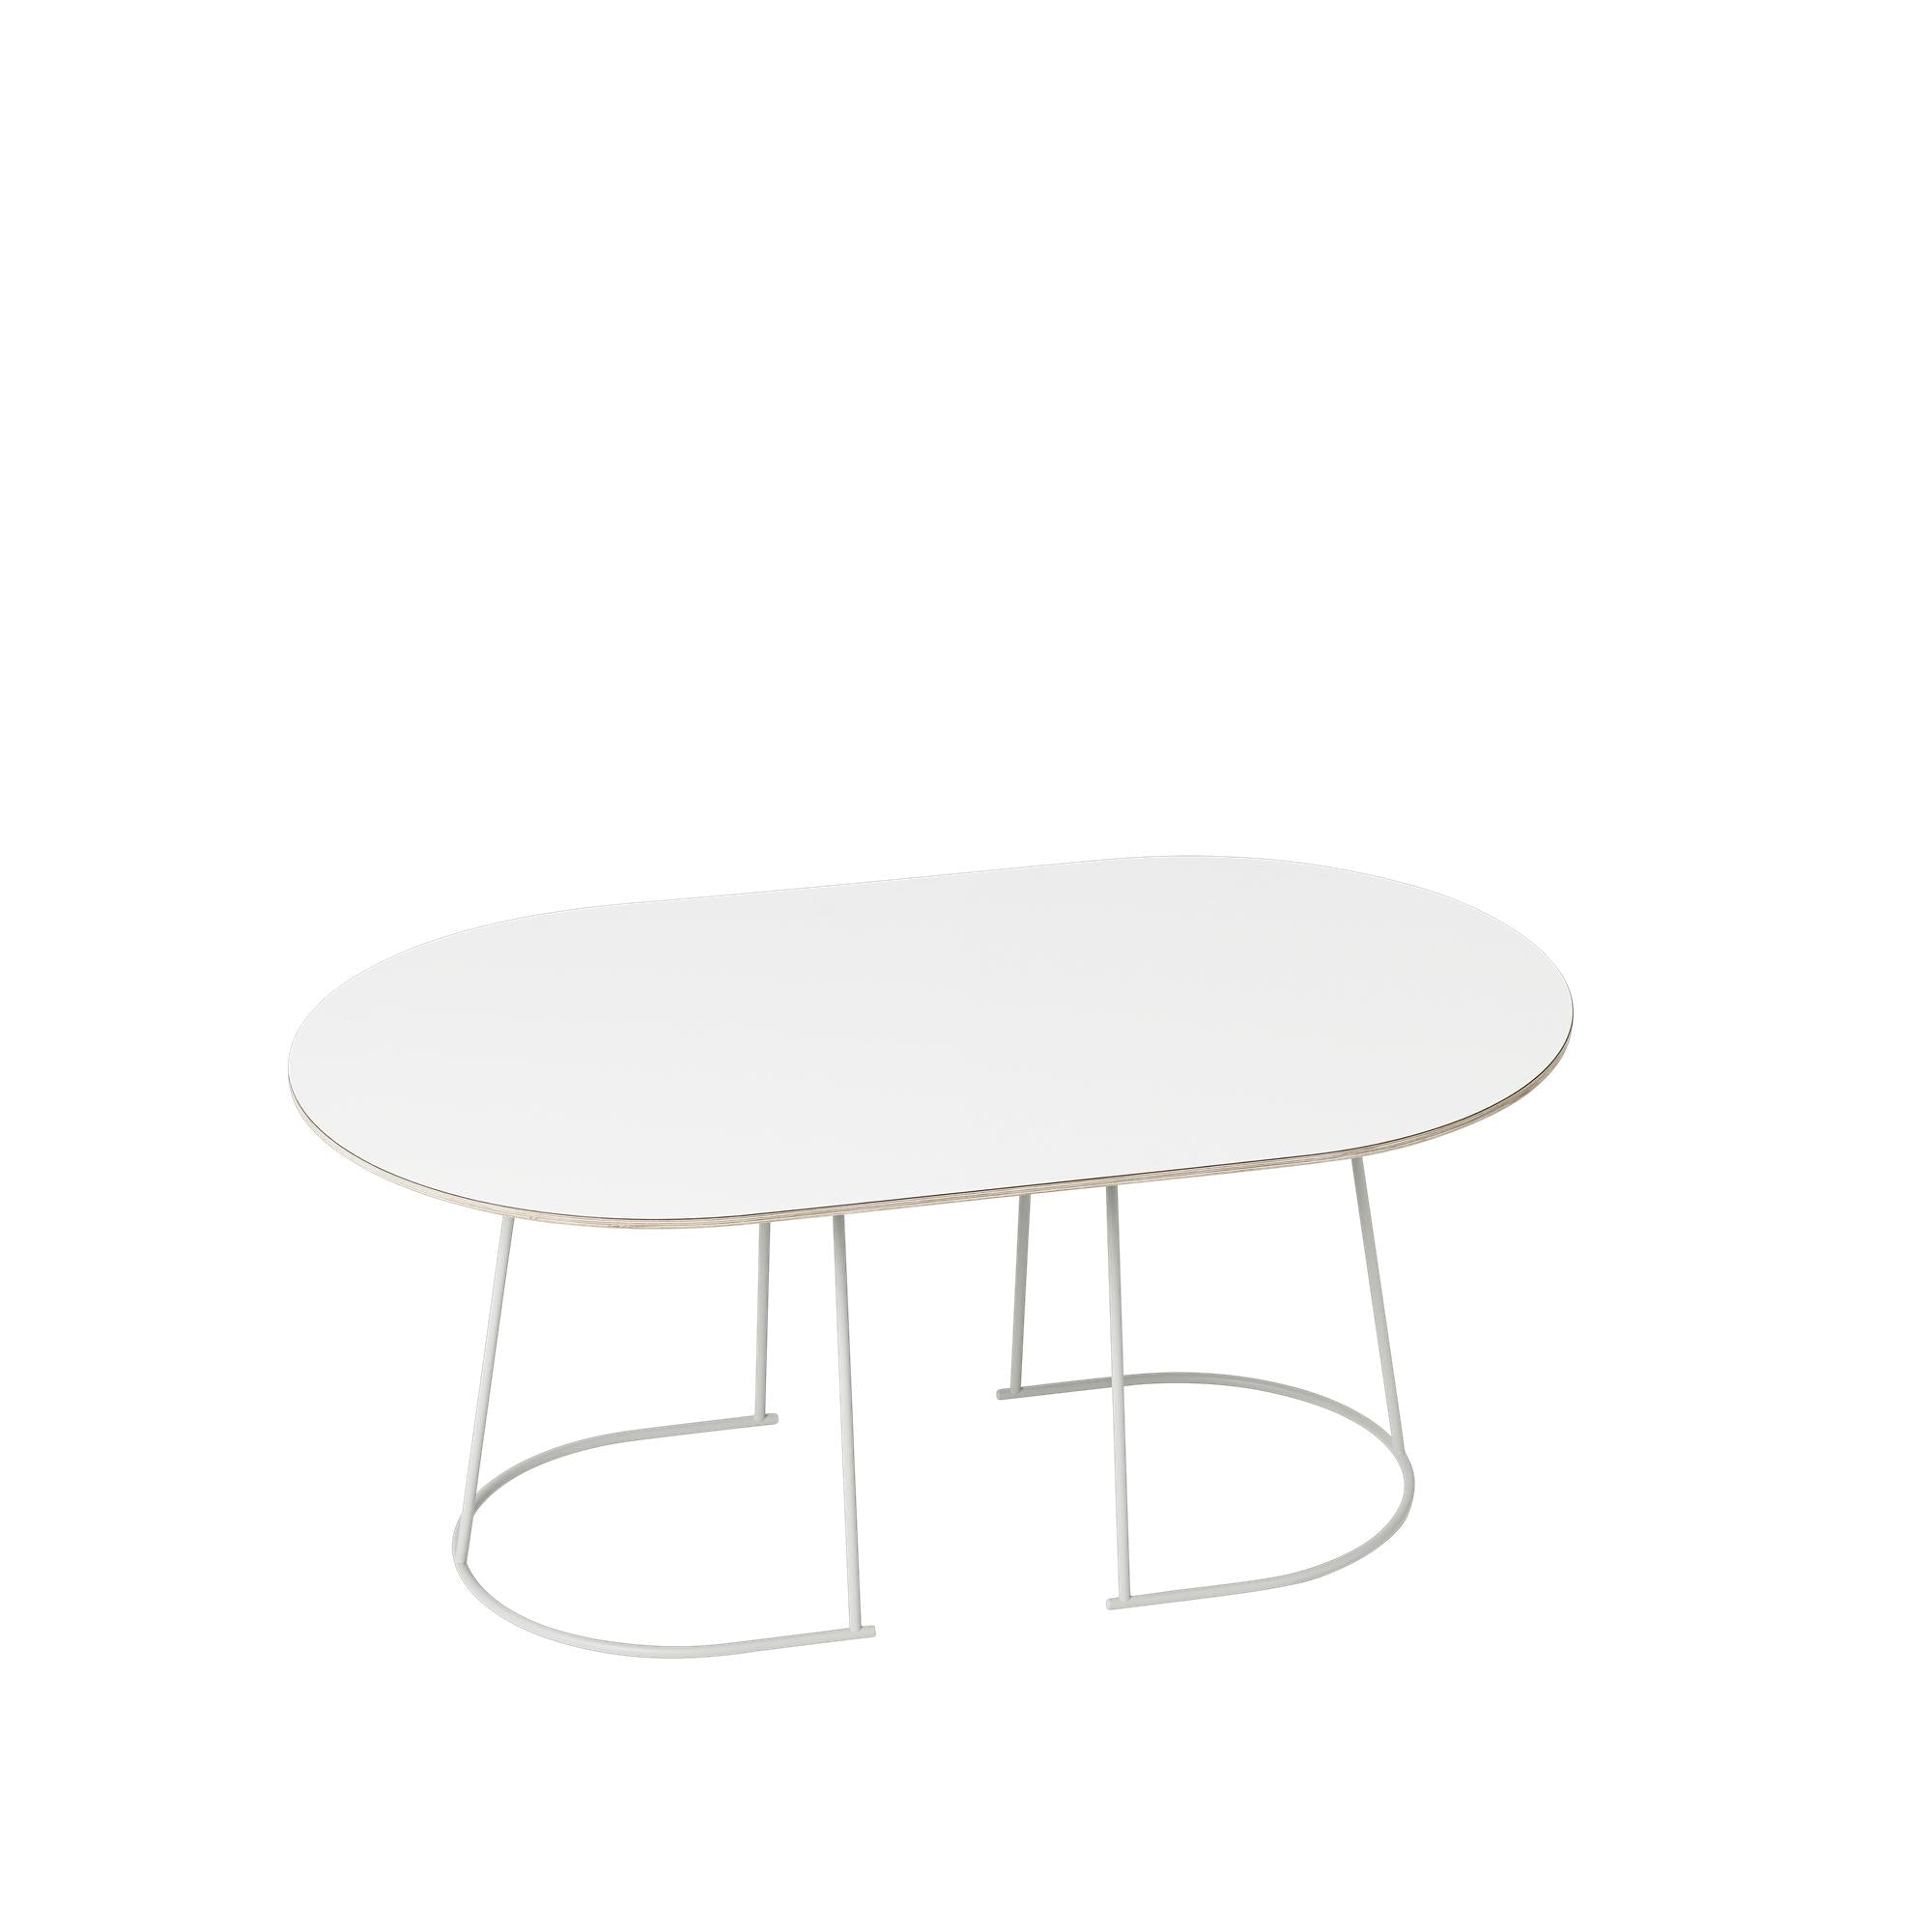 Table basse Airy Muuto 88 x51 cm, à l'abri du blanc